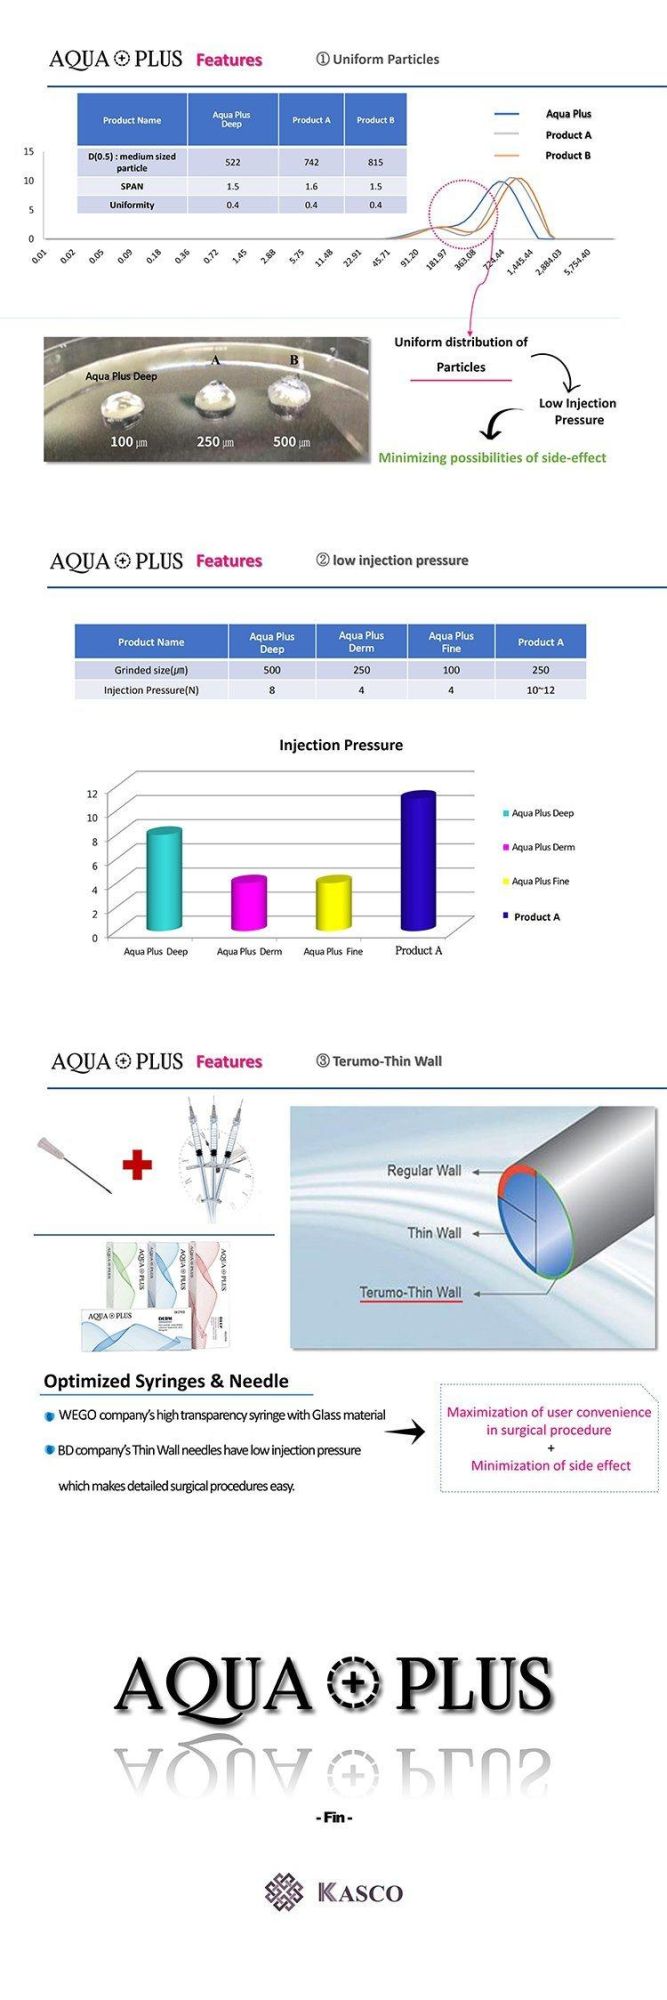 Aqua Plus Top-Selling Dermal Filler Injectable/Hyaluronic Acid Dermal Filler.